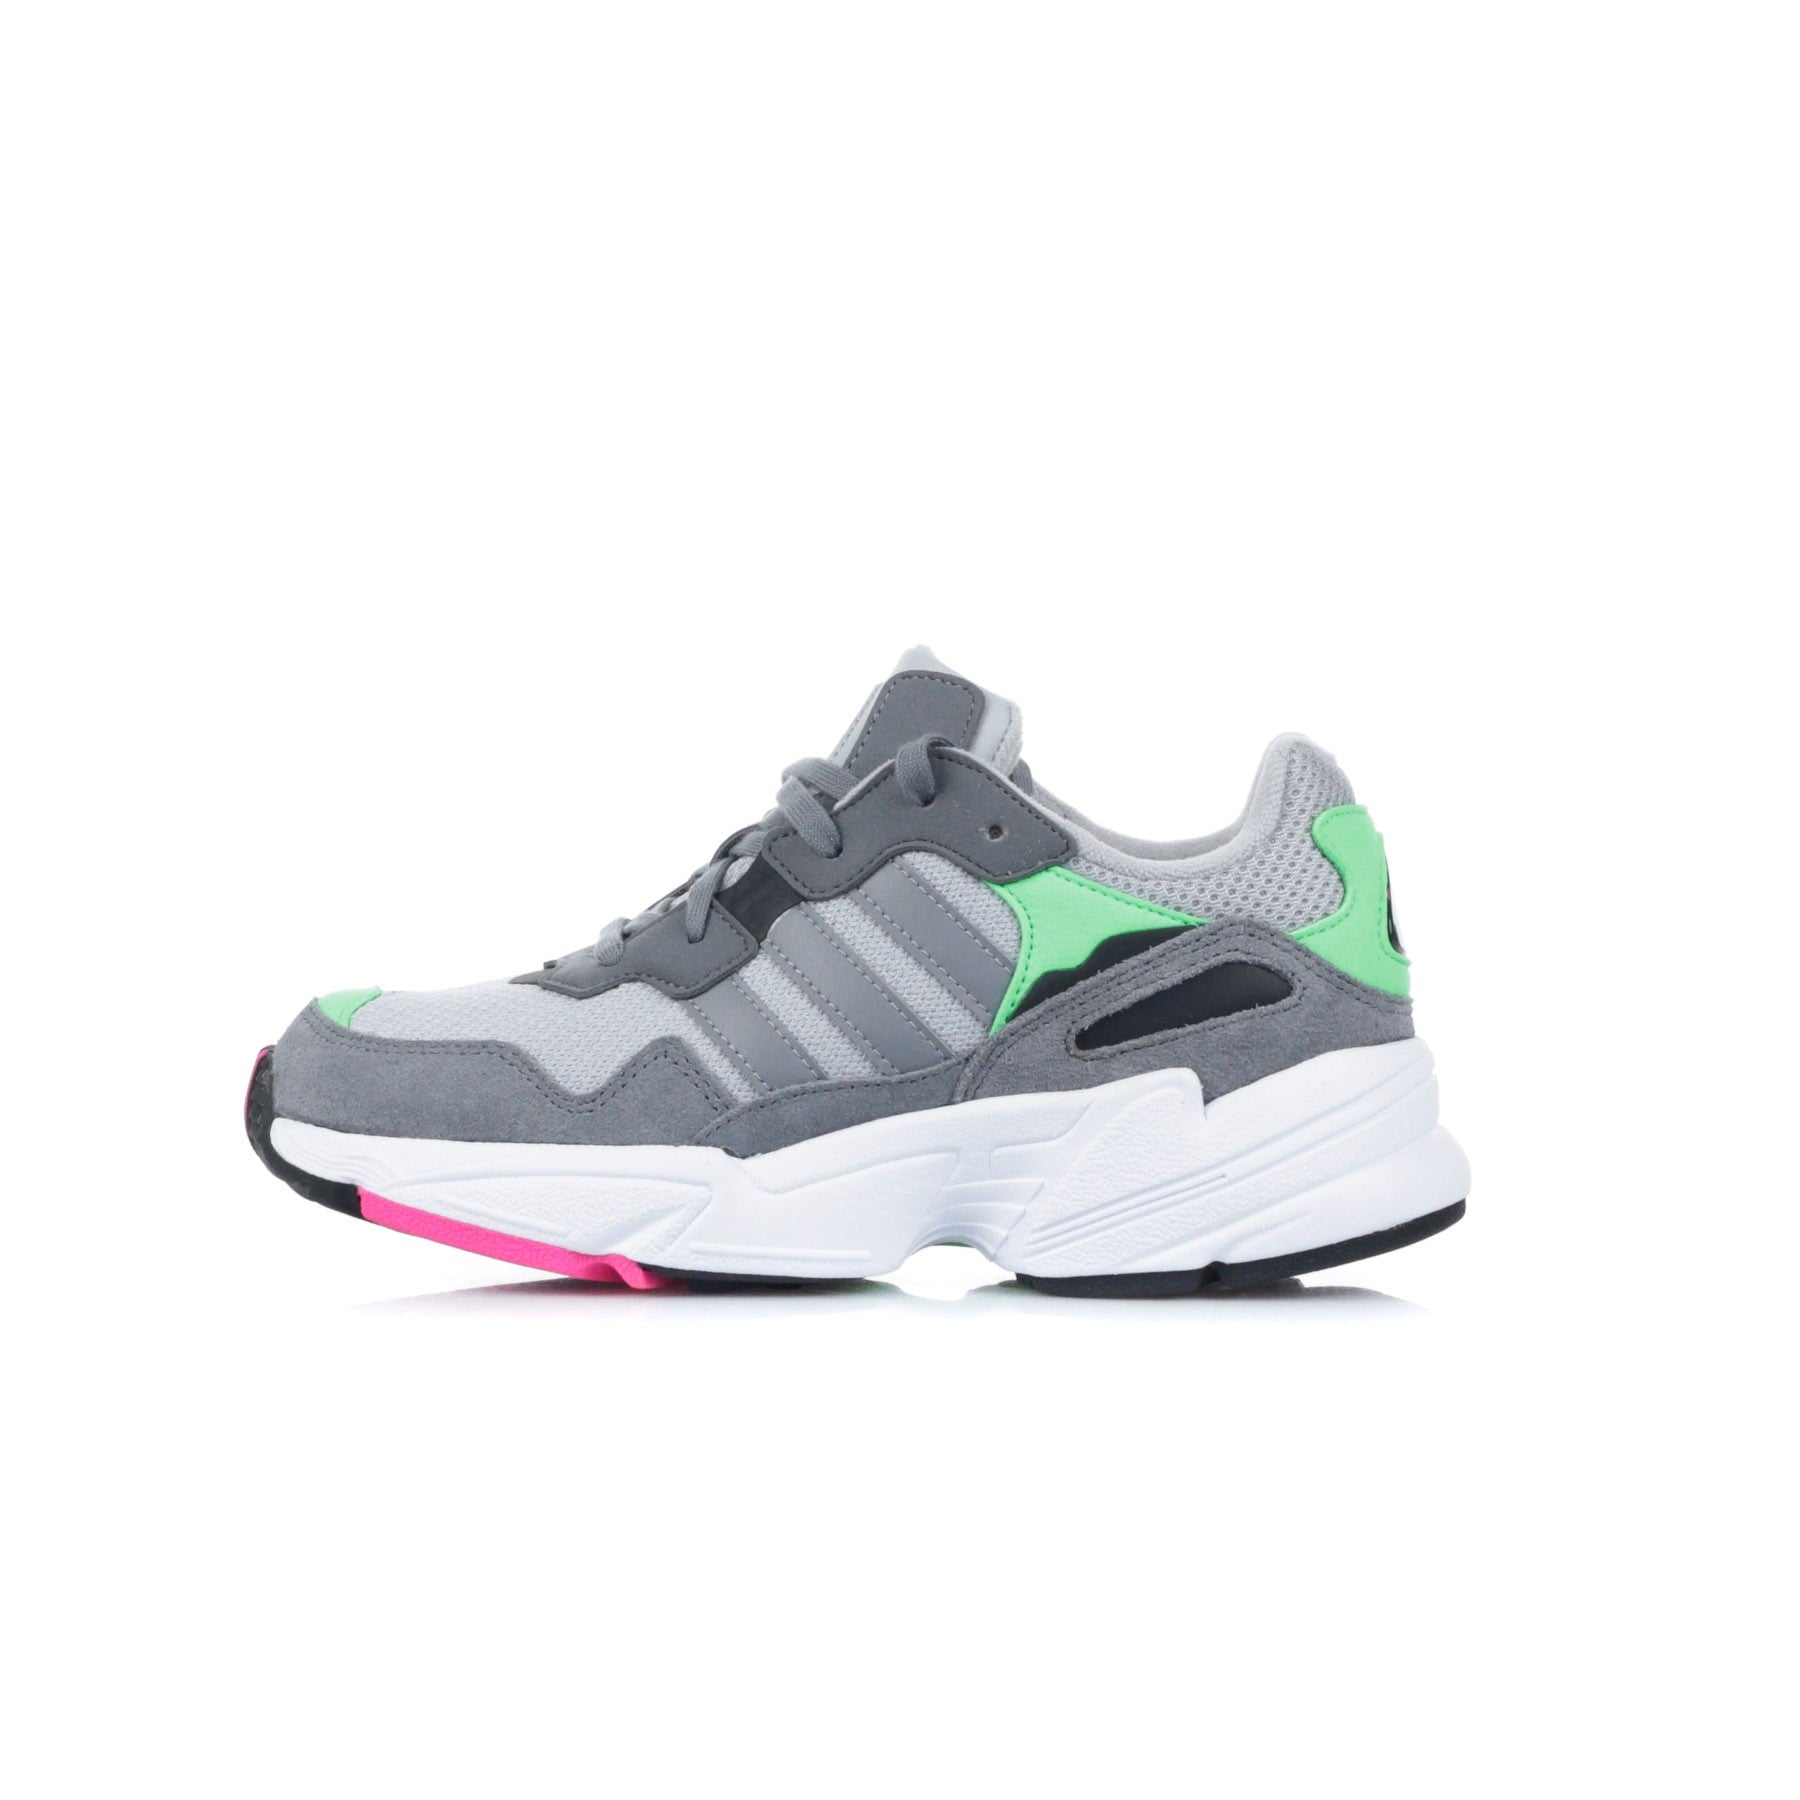 Adidas, Scarpa Bassa Ragazzo Yung-96 J, Grey Two/grey Three/shock Pink